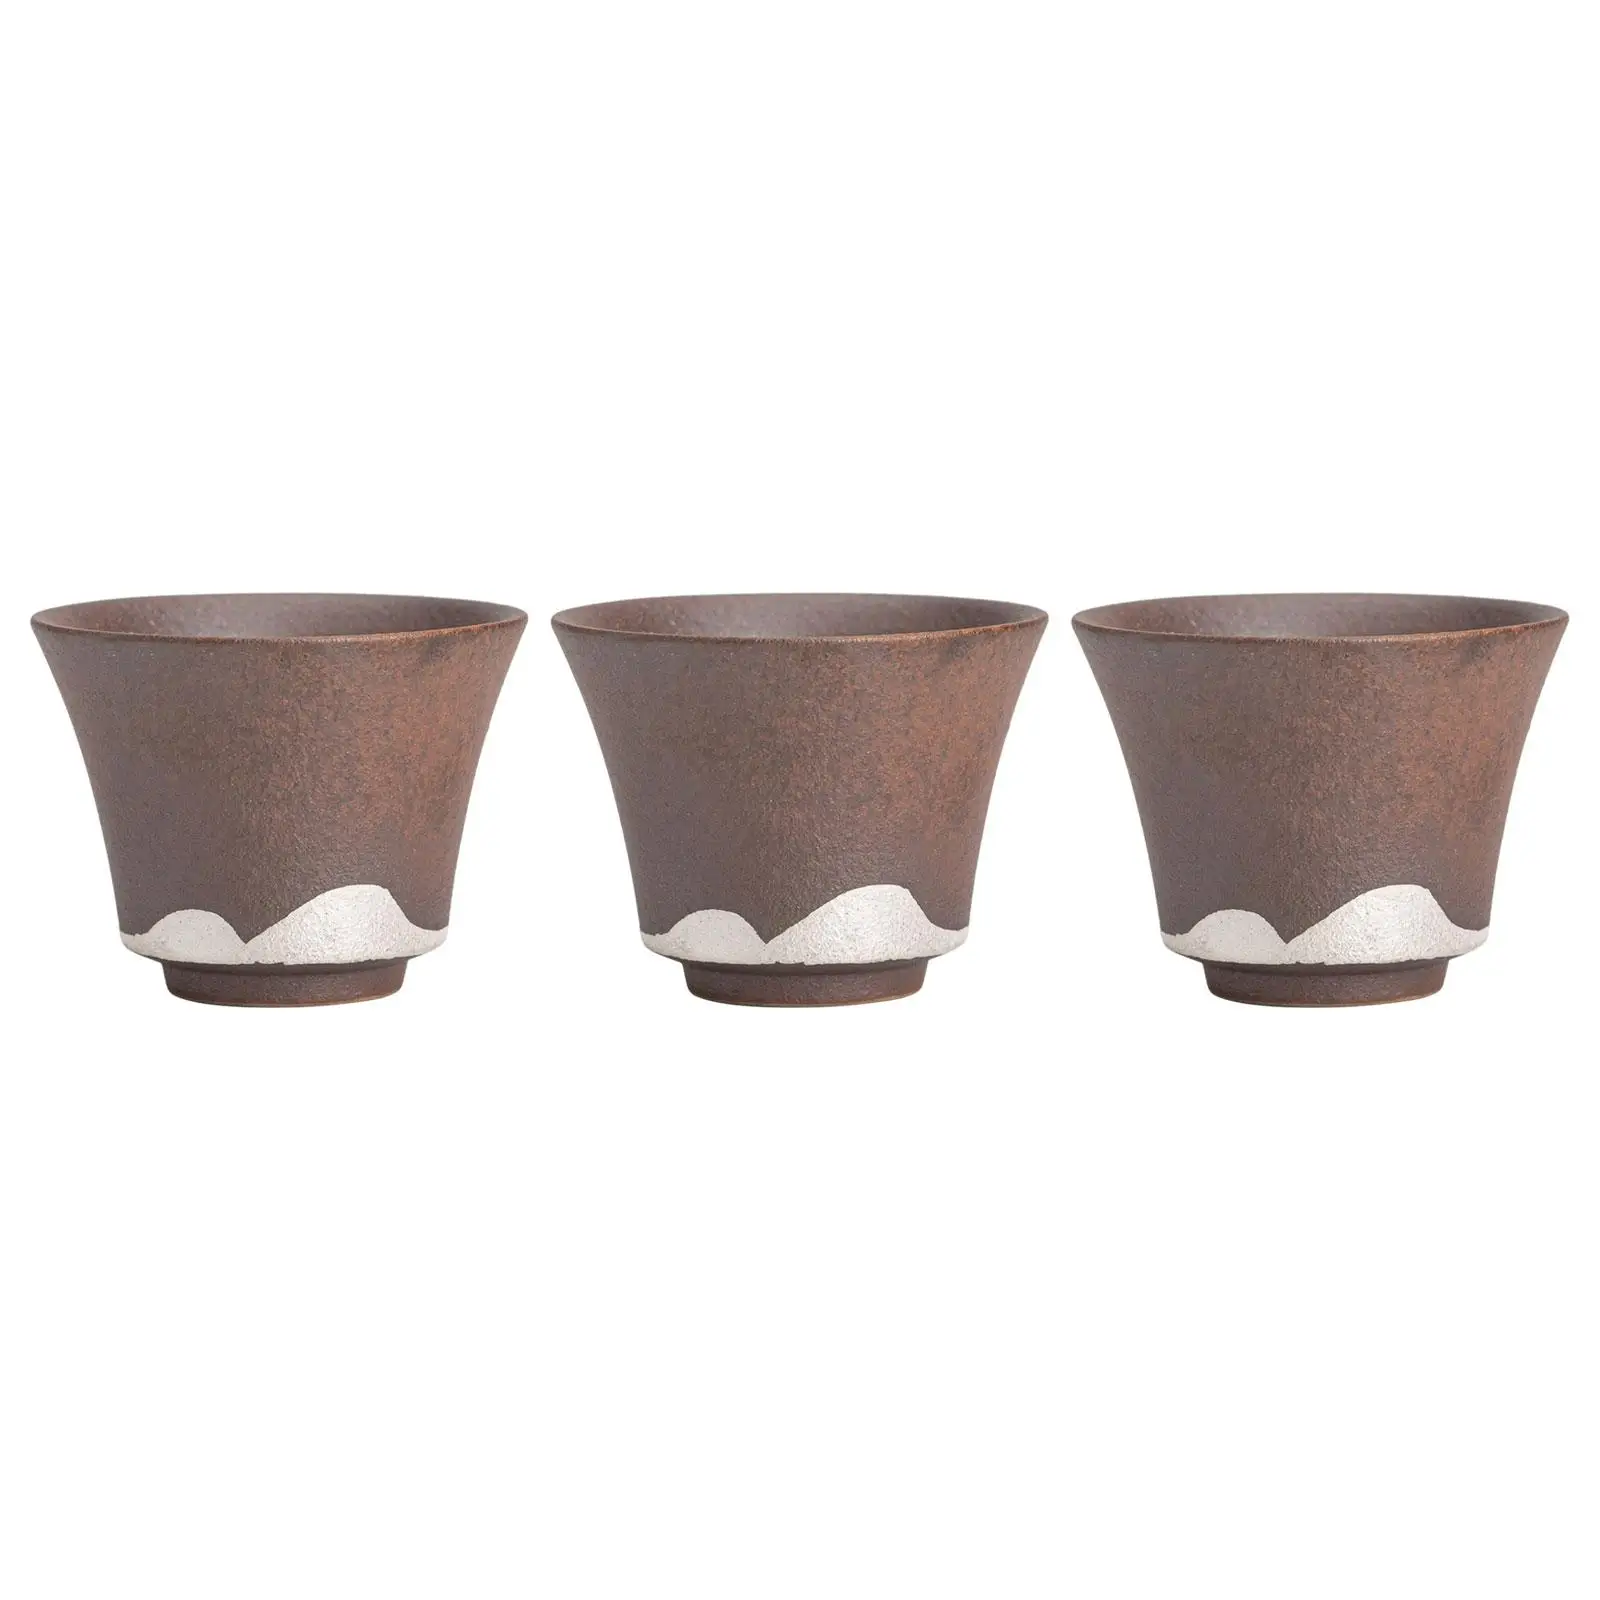 3Pcs Chinese Tea Cup Set Portable Porcelain Tea Pot without Handles Drinkware Tea Mug for Hiking Home Tea House Kitchen Hotel